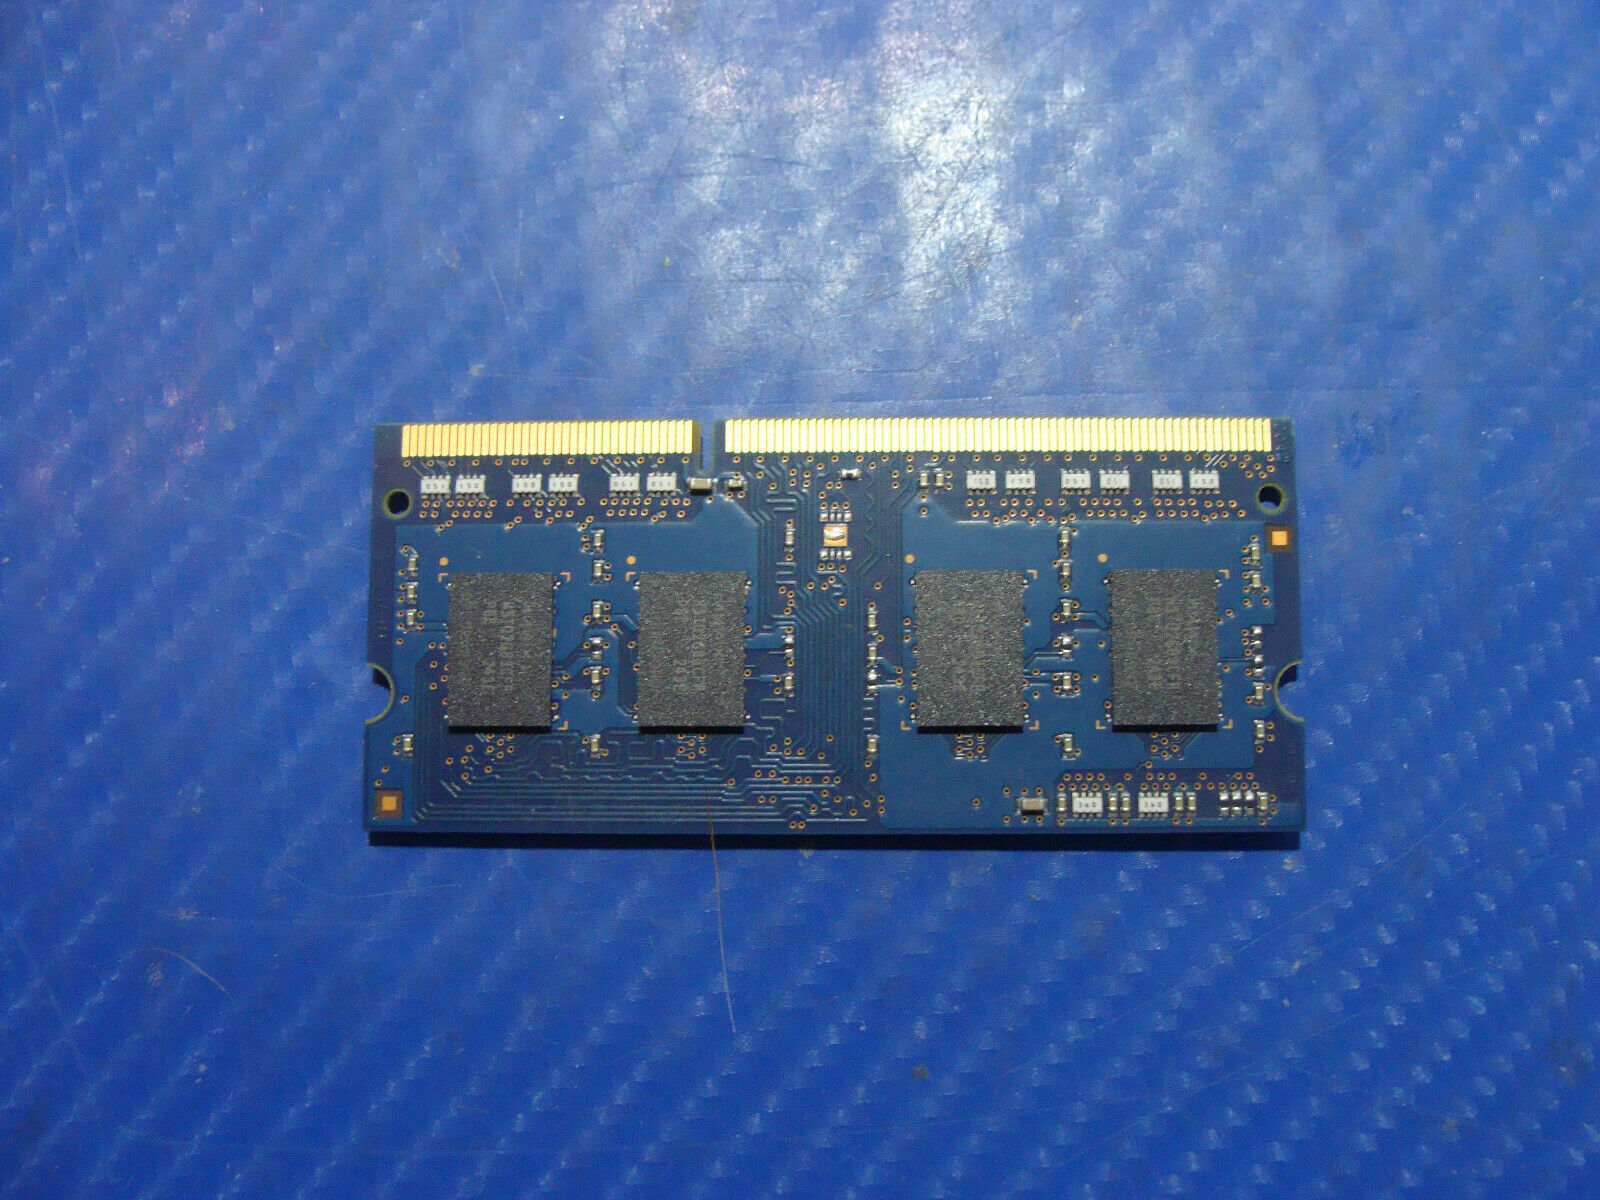 MacBook A1278 Laptop Hynix 2GB Memory HMT325S6CFR8C-PB PC3-12800S-11-12-B2 #1 Hynix